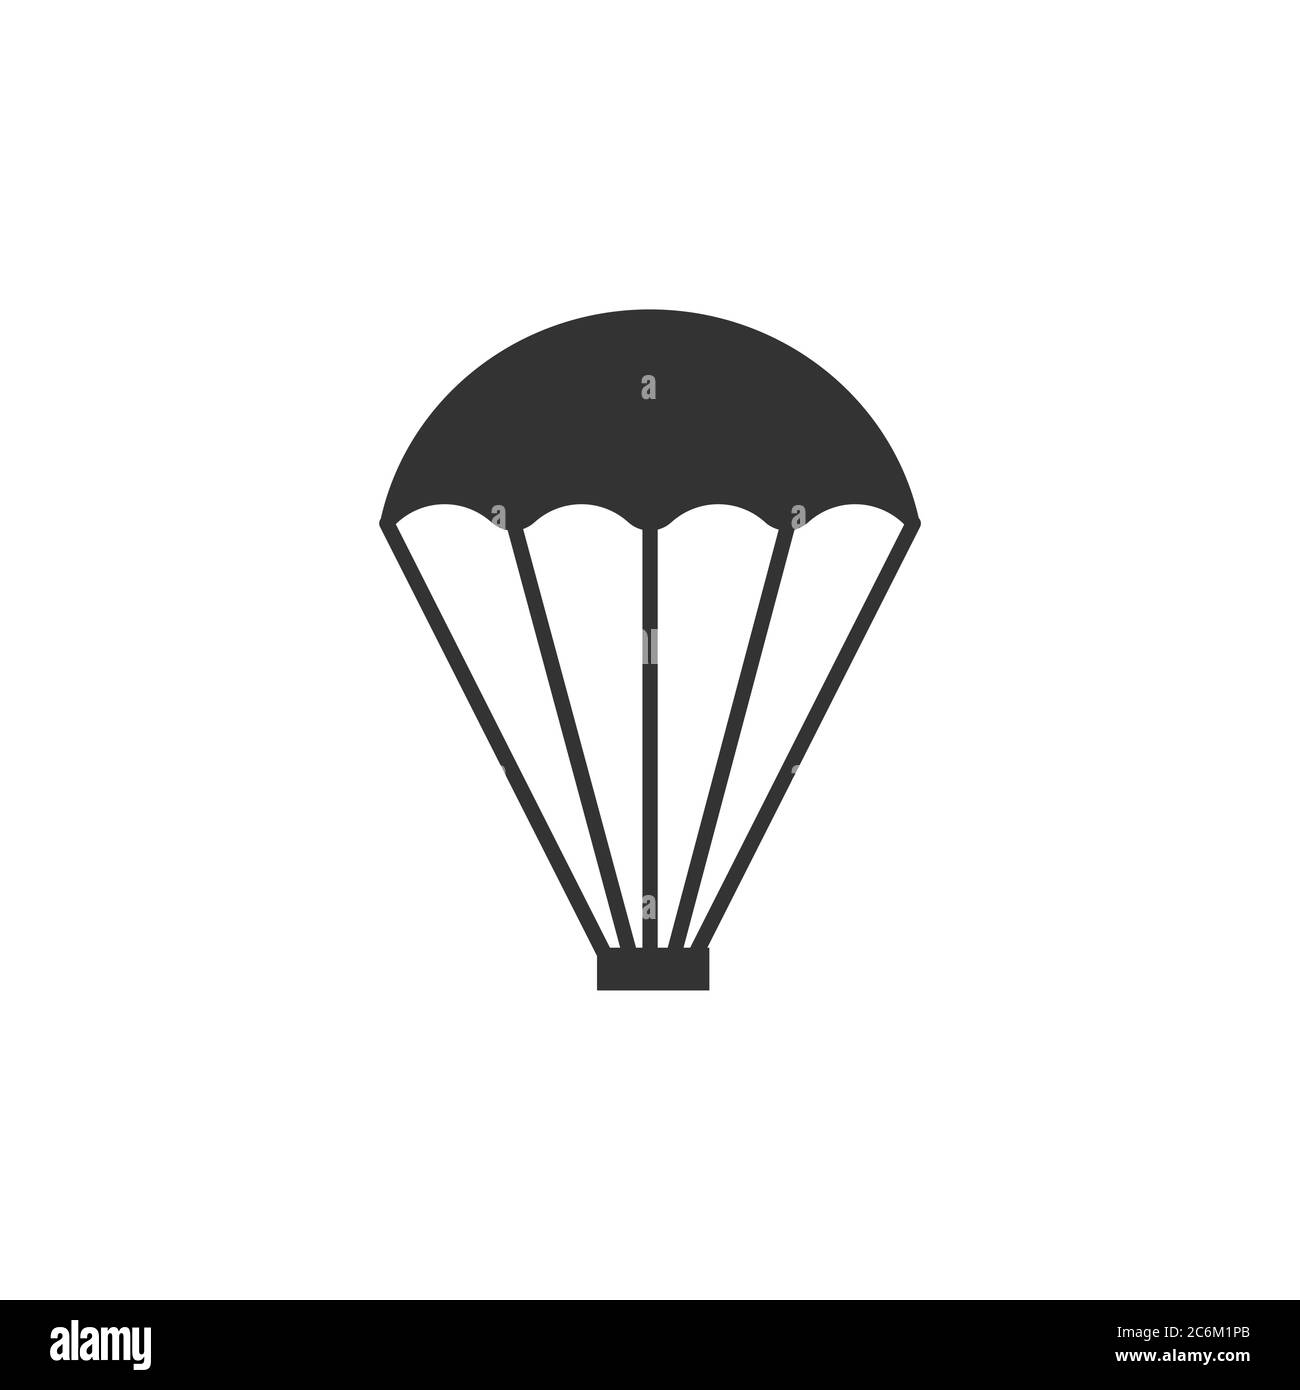 parachute vector graphic design illustration Stock Vector